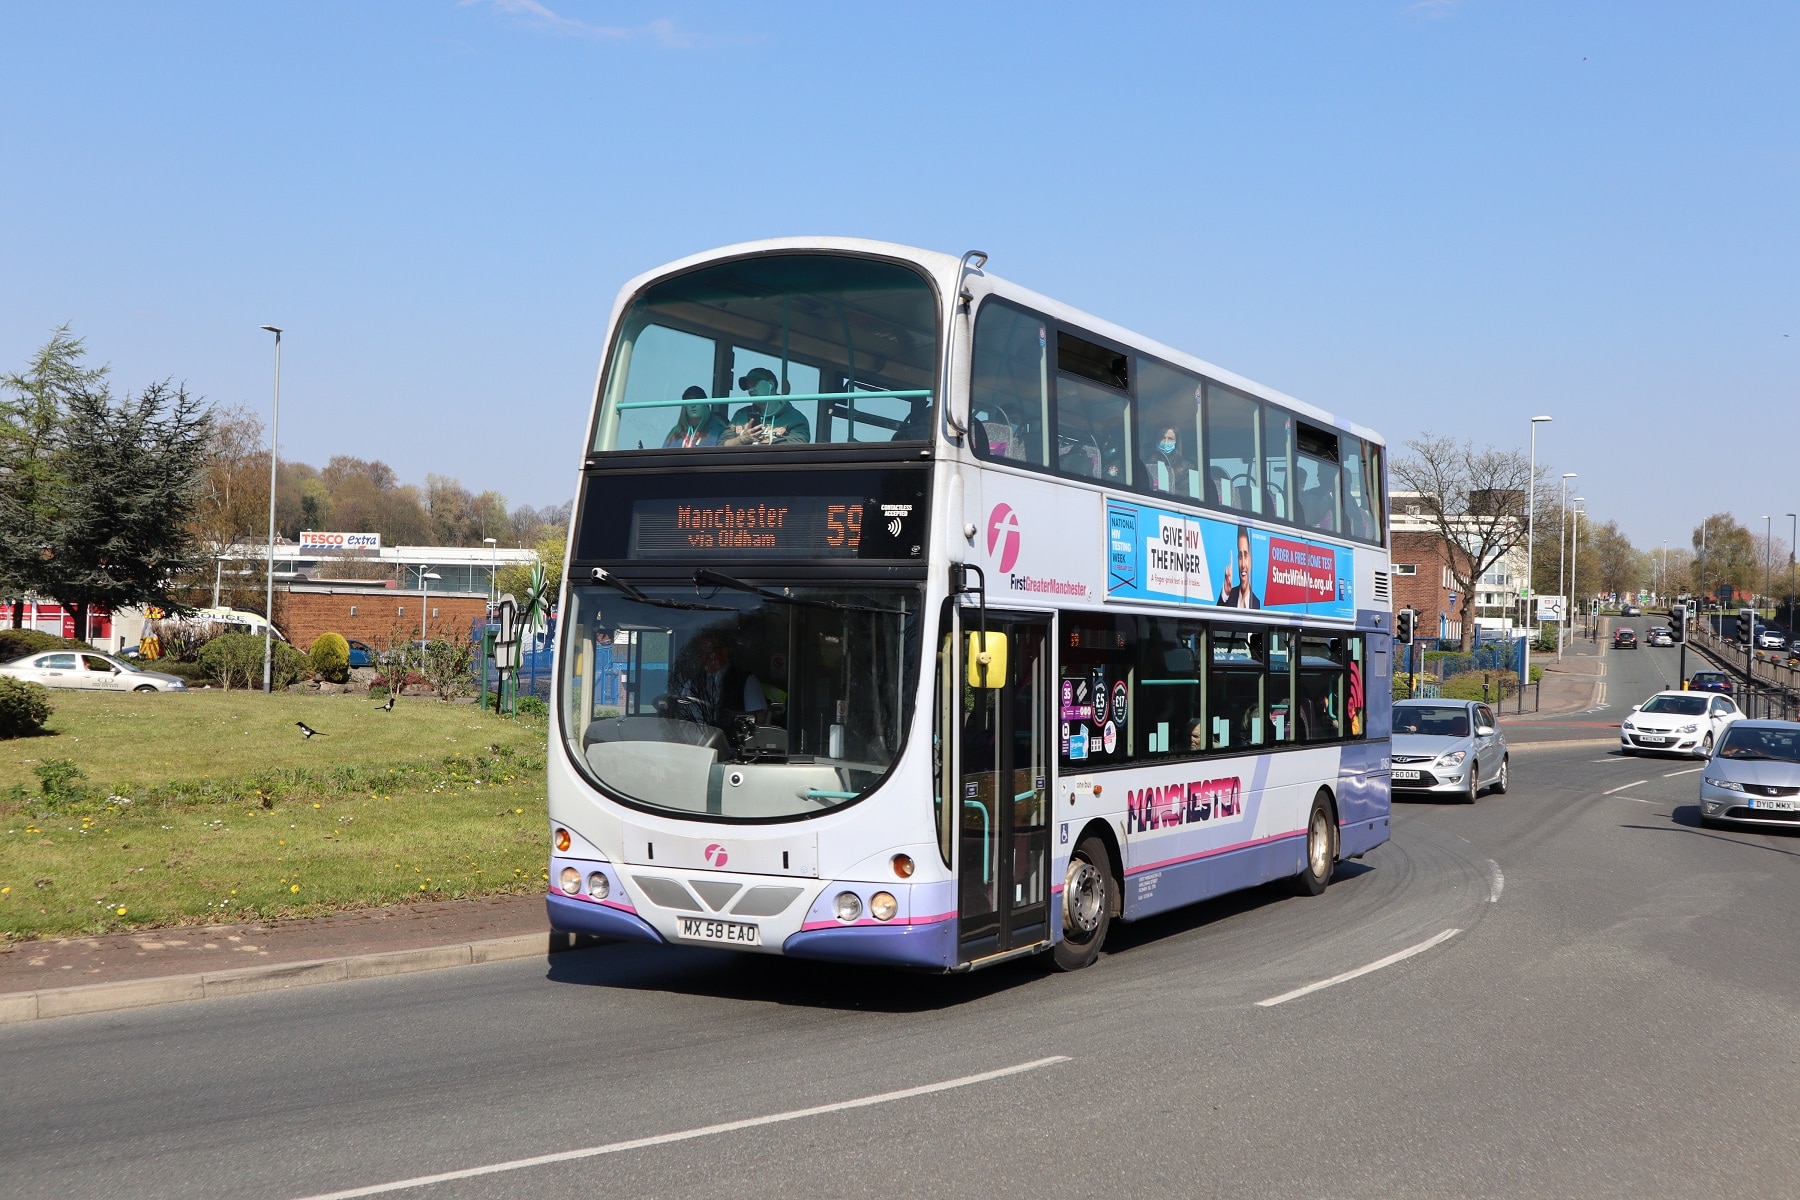 Bus Service Improvement Plan guidance published